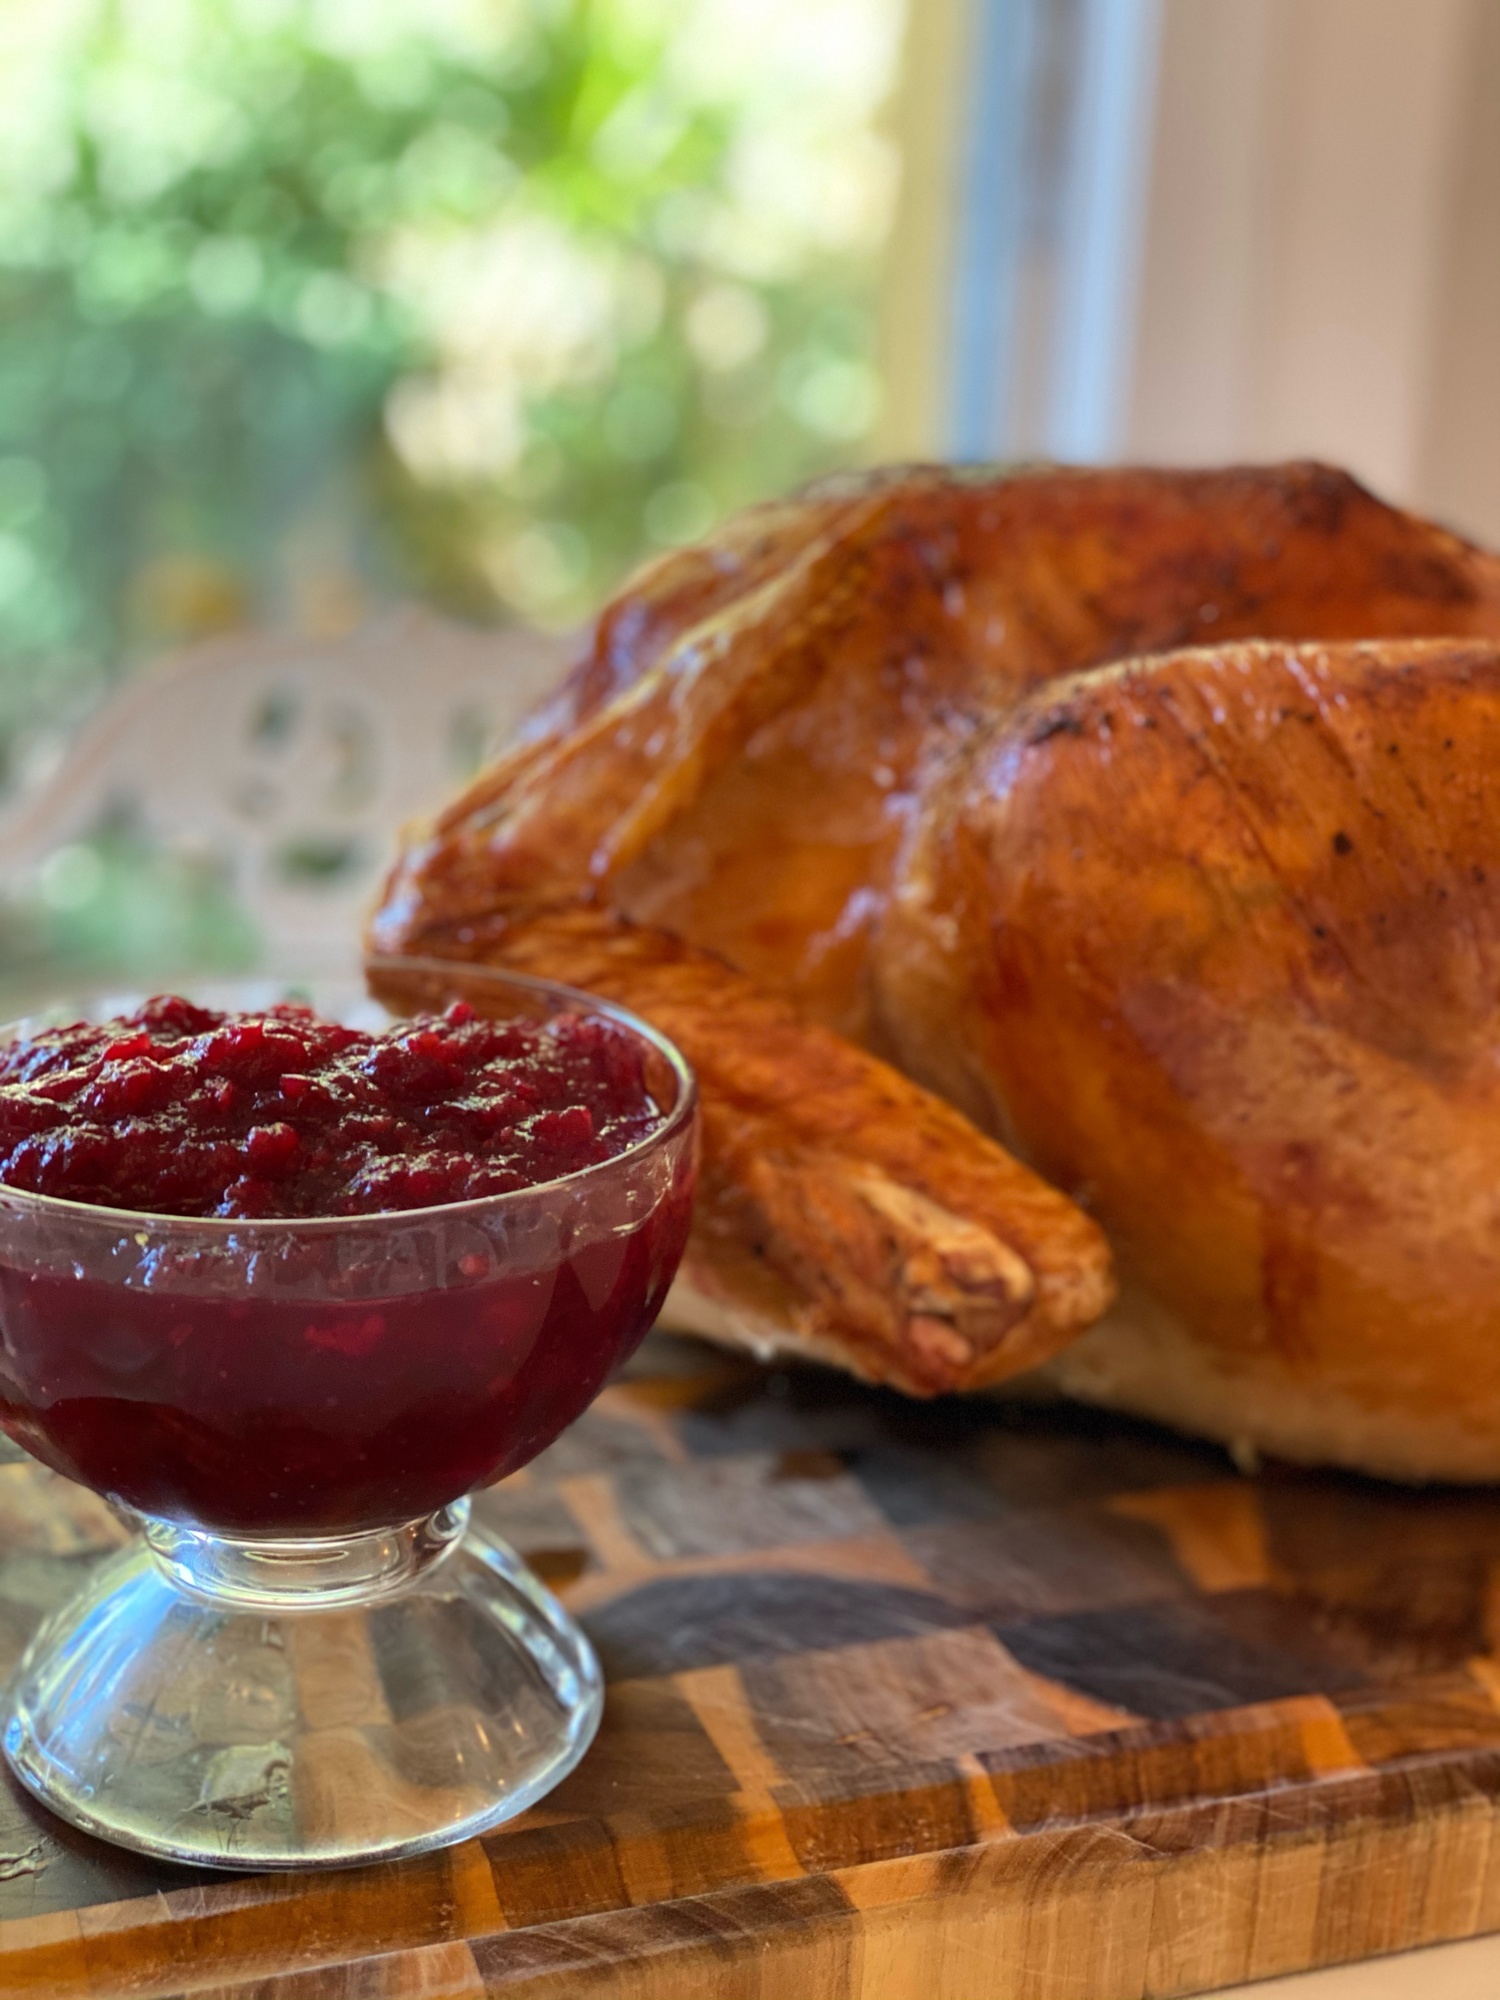 Cranberry sauce and turkey. Photo courtesy of Hal Christensen.